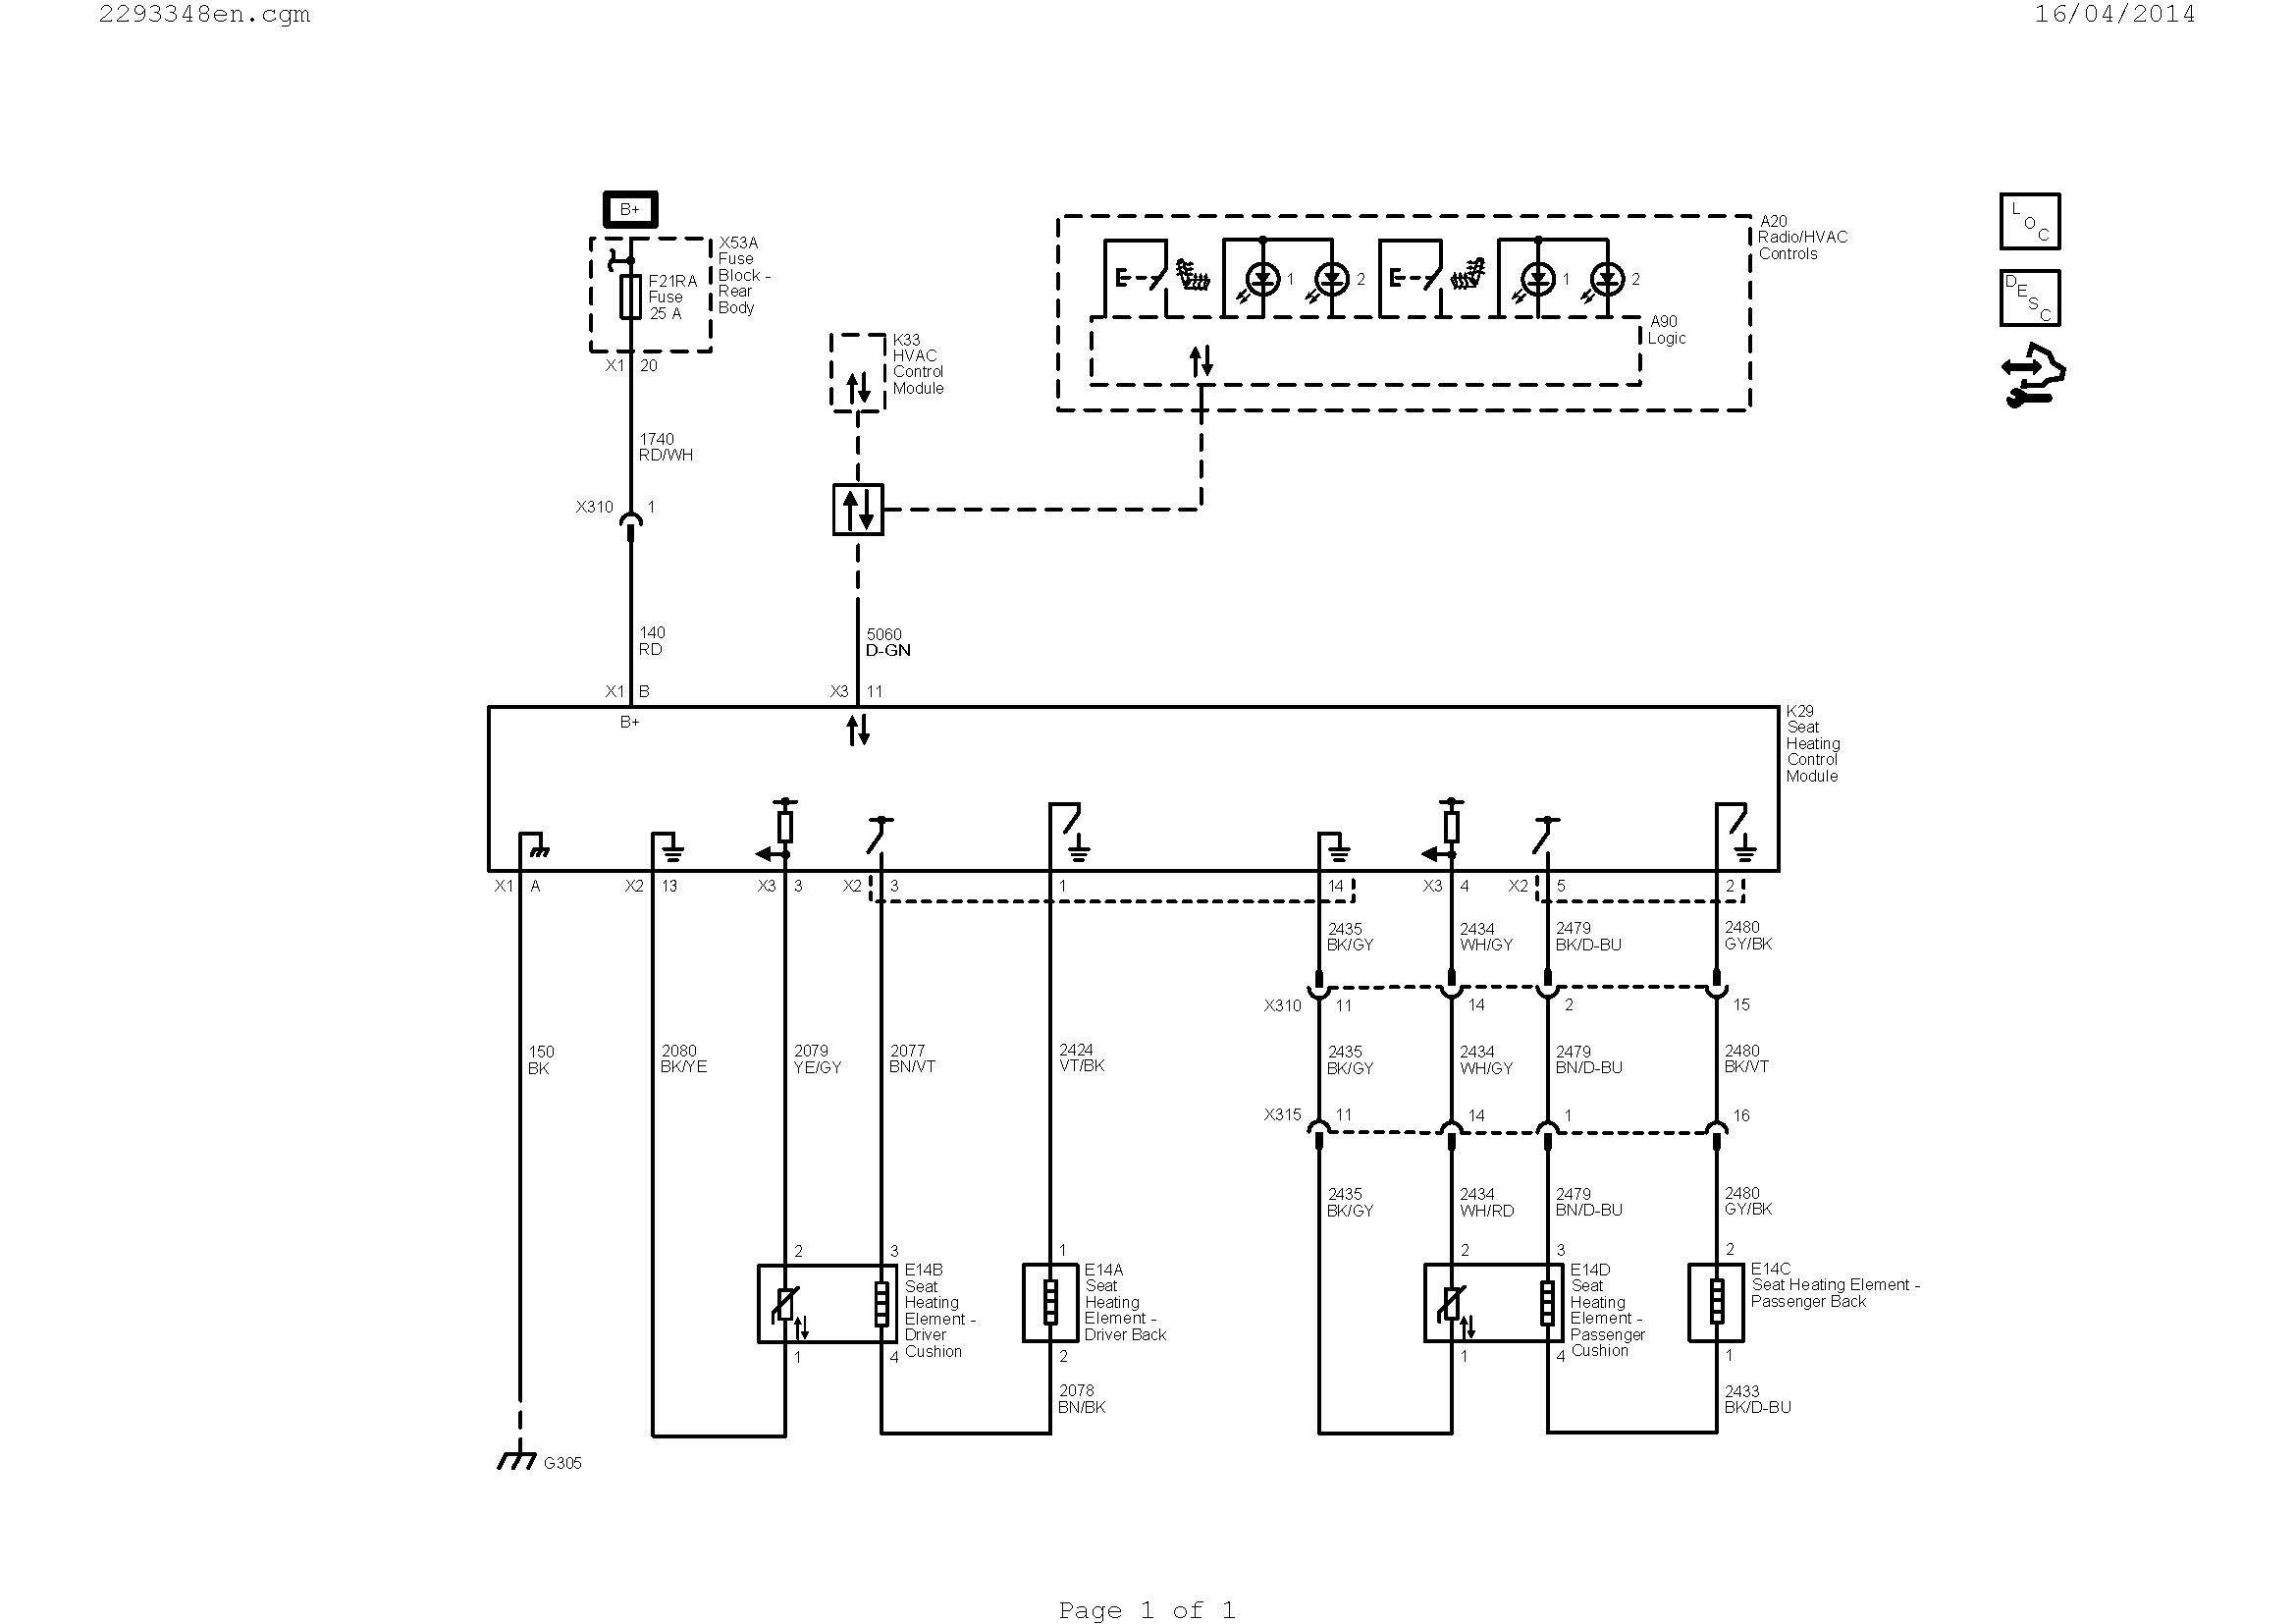 Generac Generator Wiring Diagram Reference Generator Automatic Transfer Switch Wiring Diagram Generac With